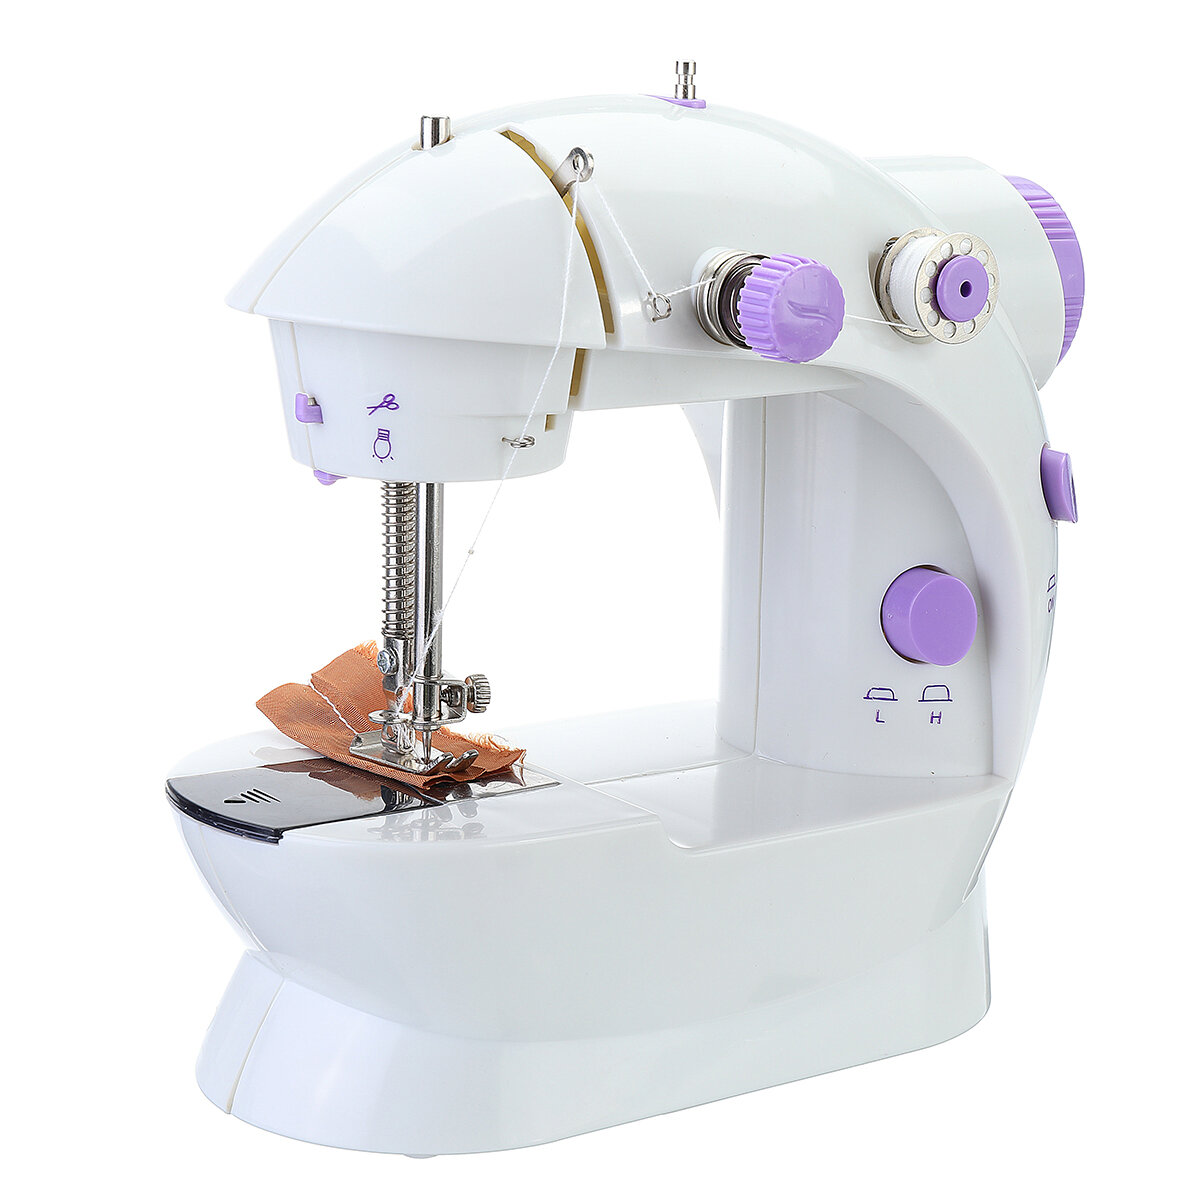 Draagbare naaimachine Mini met lampdraadsnijder Uitschuiftafel Elektrische naaimachines DIY borduurm